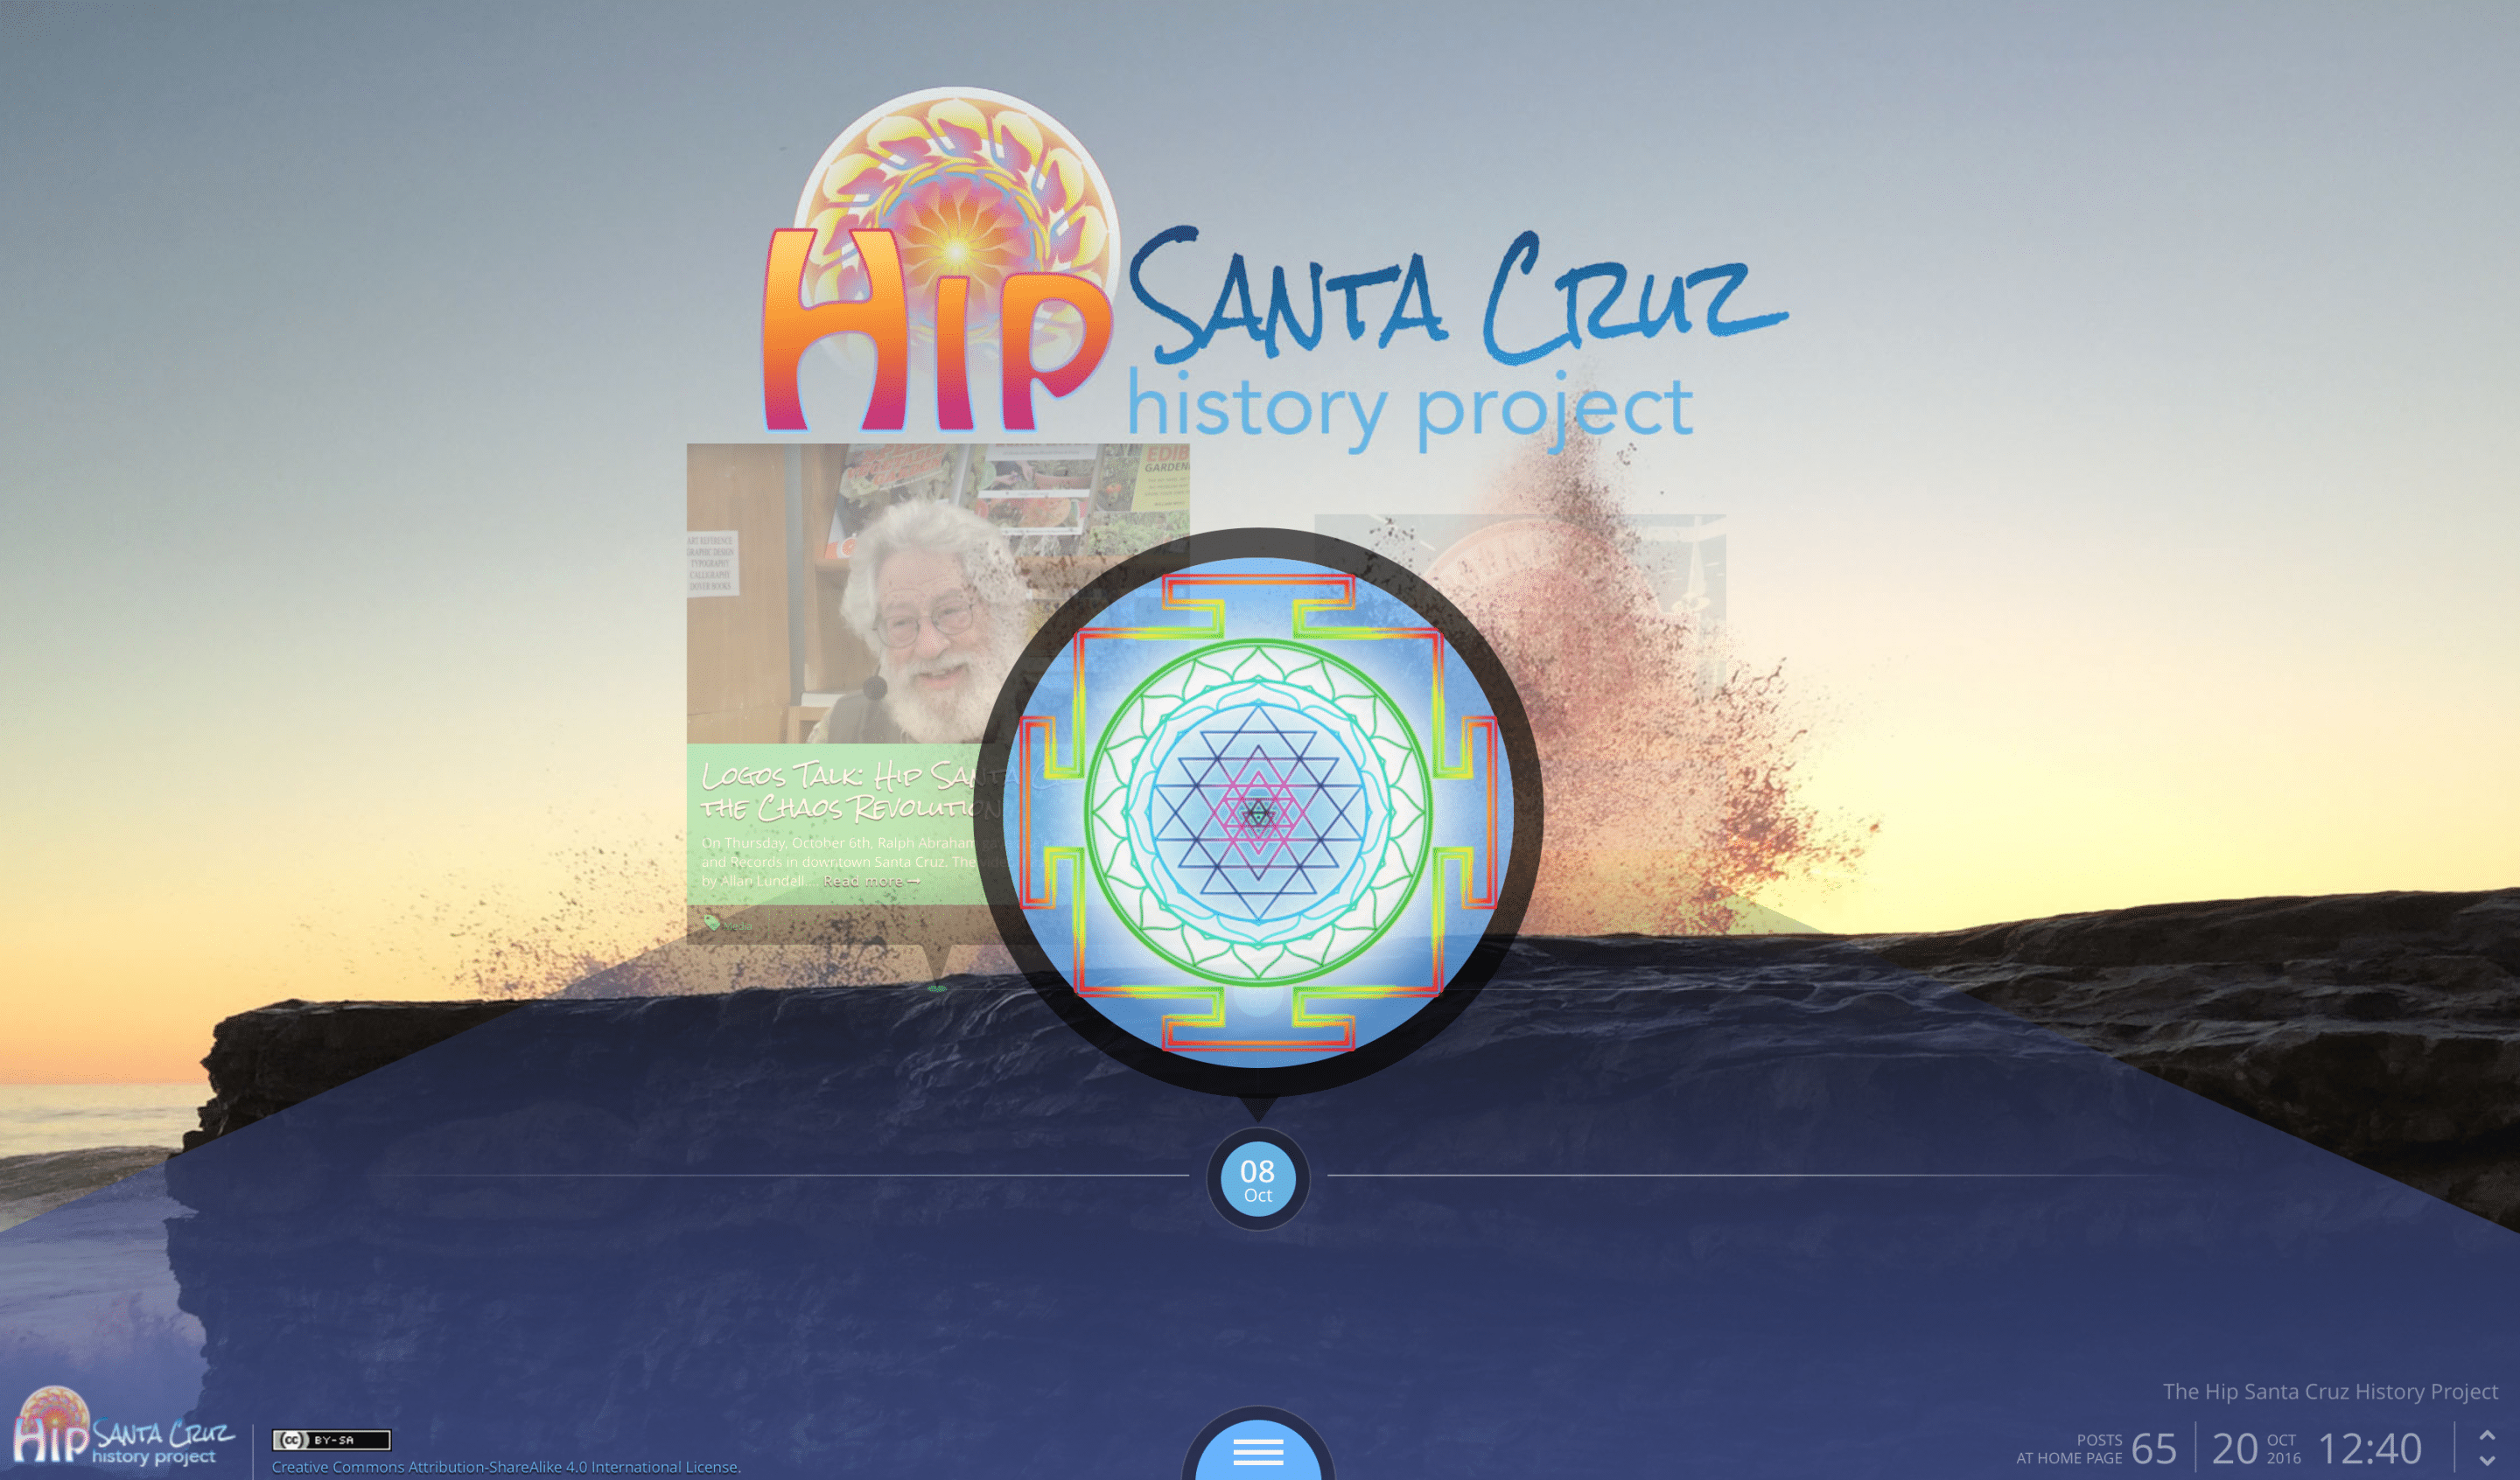 Hip Santa Cruz History Project